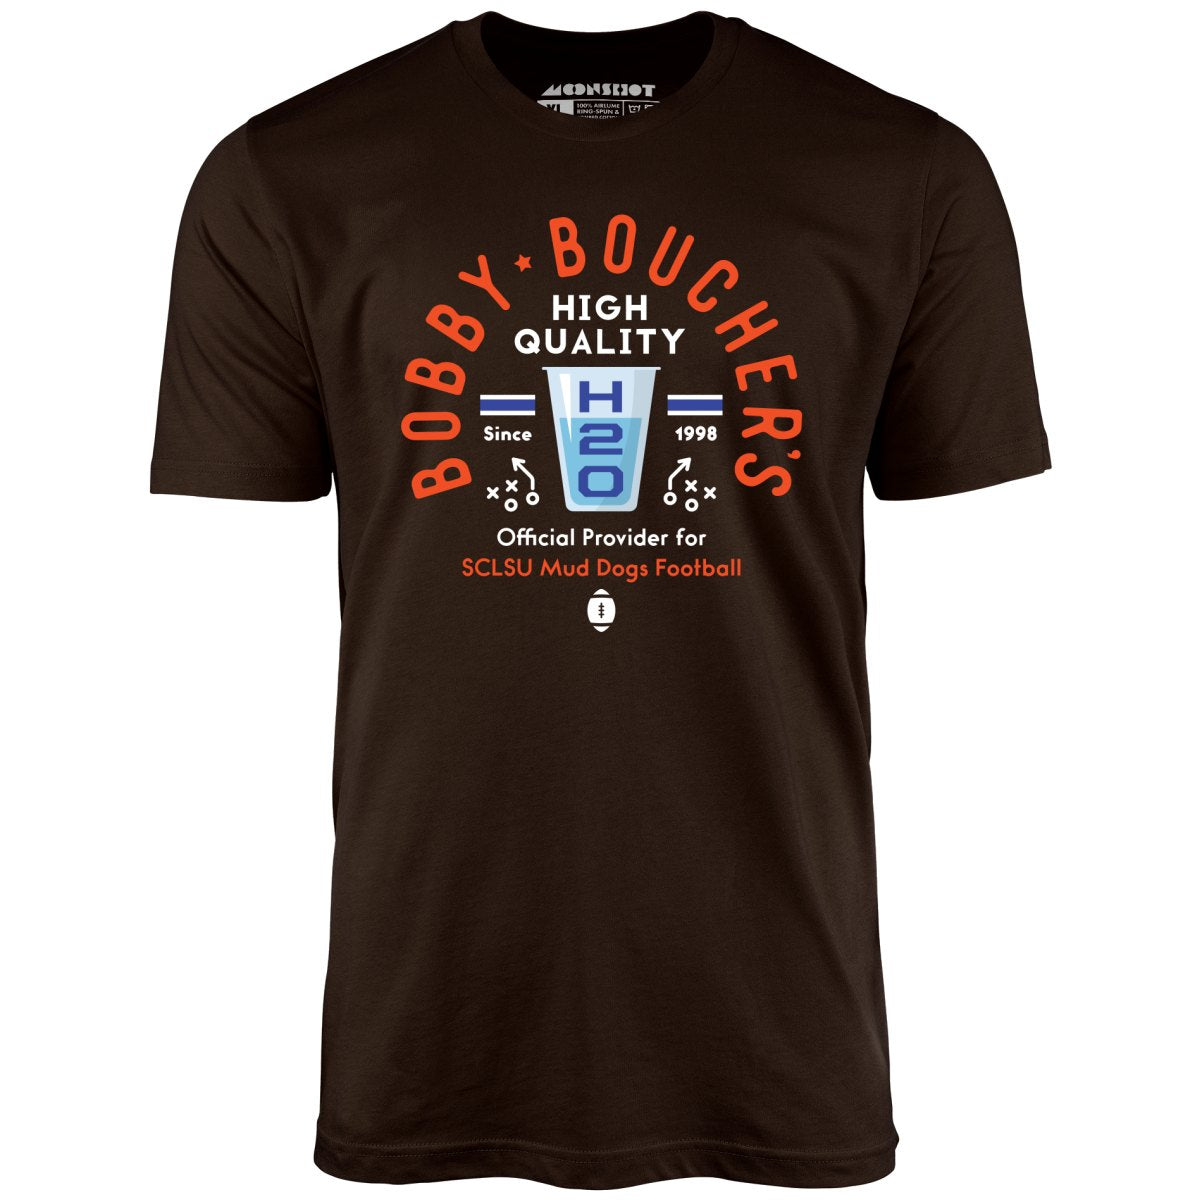 Bobby Boucher's High Quality H2O - Unisex T-Shirt